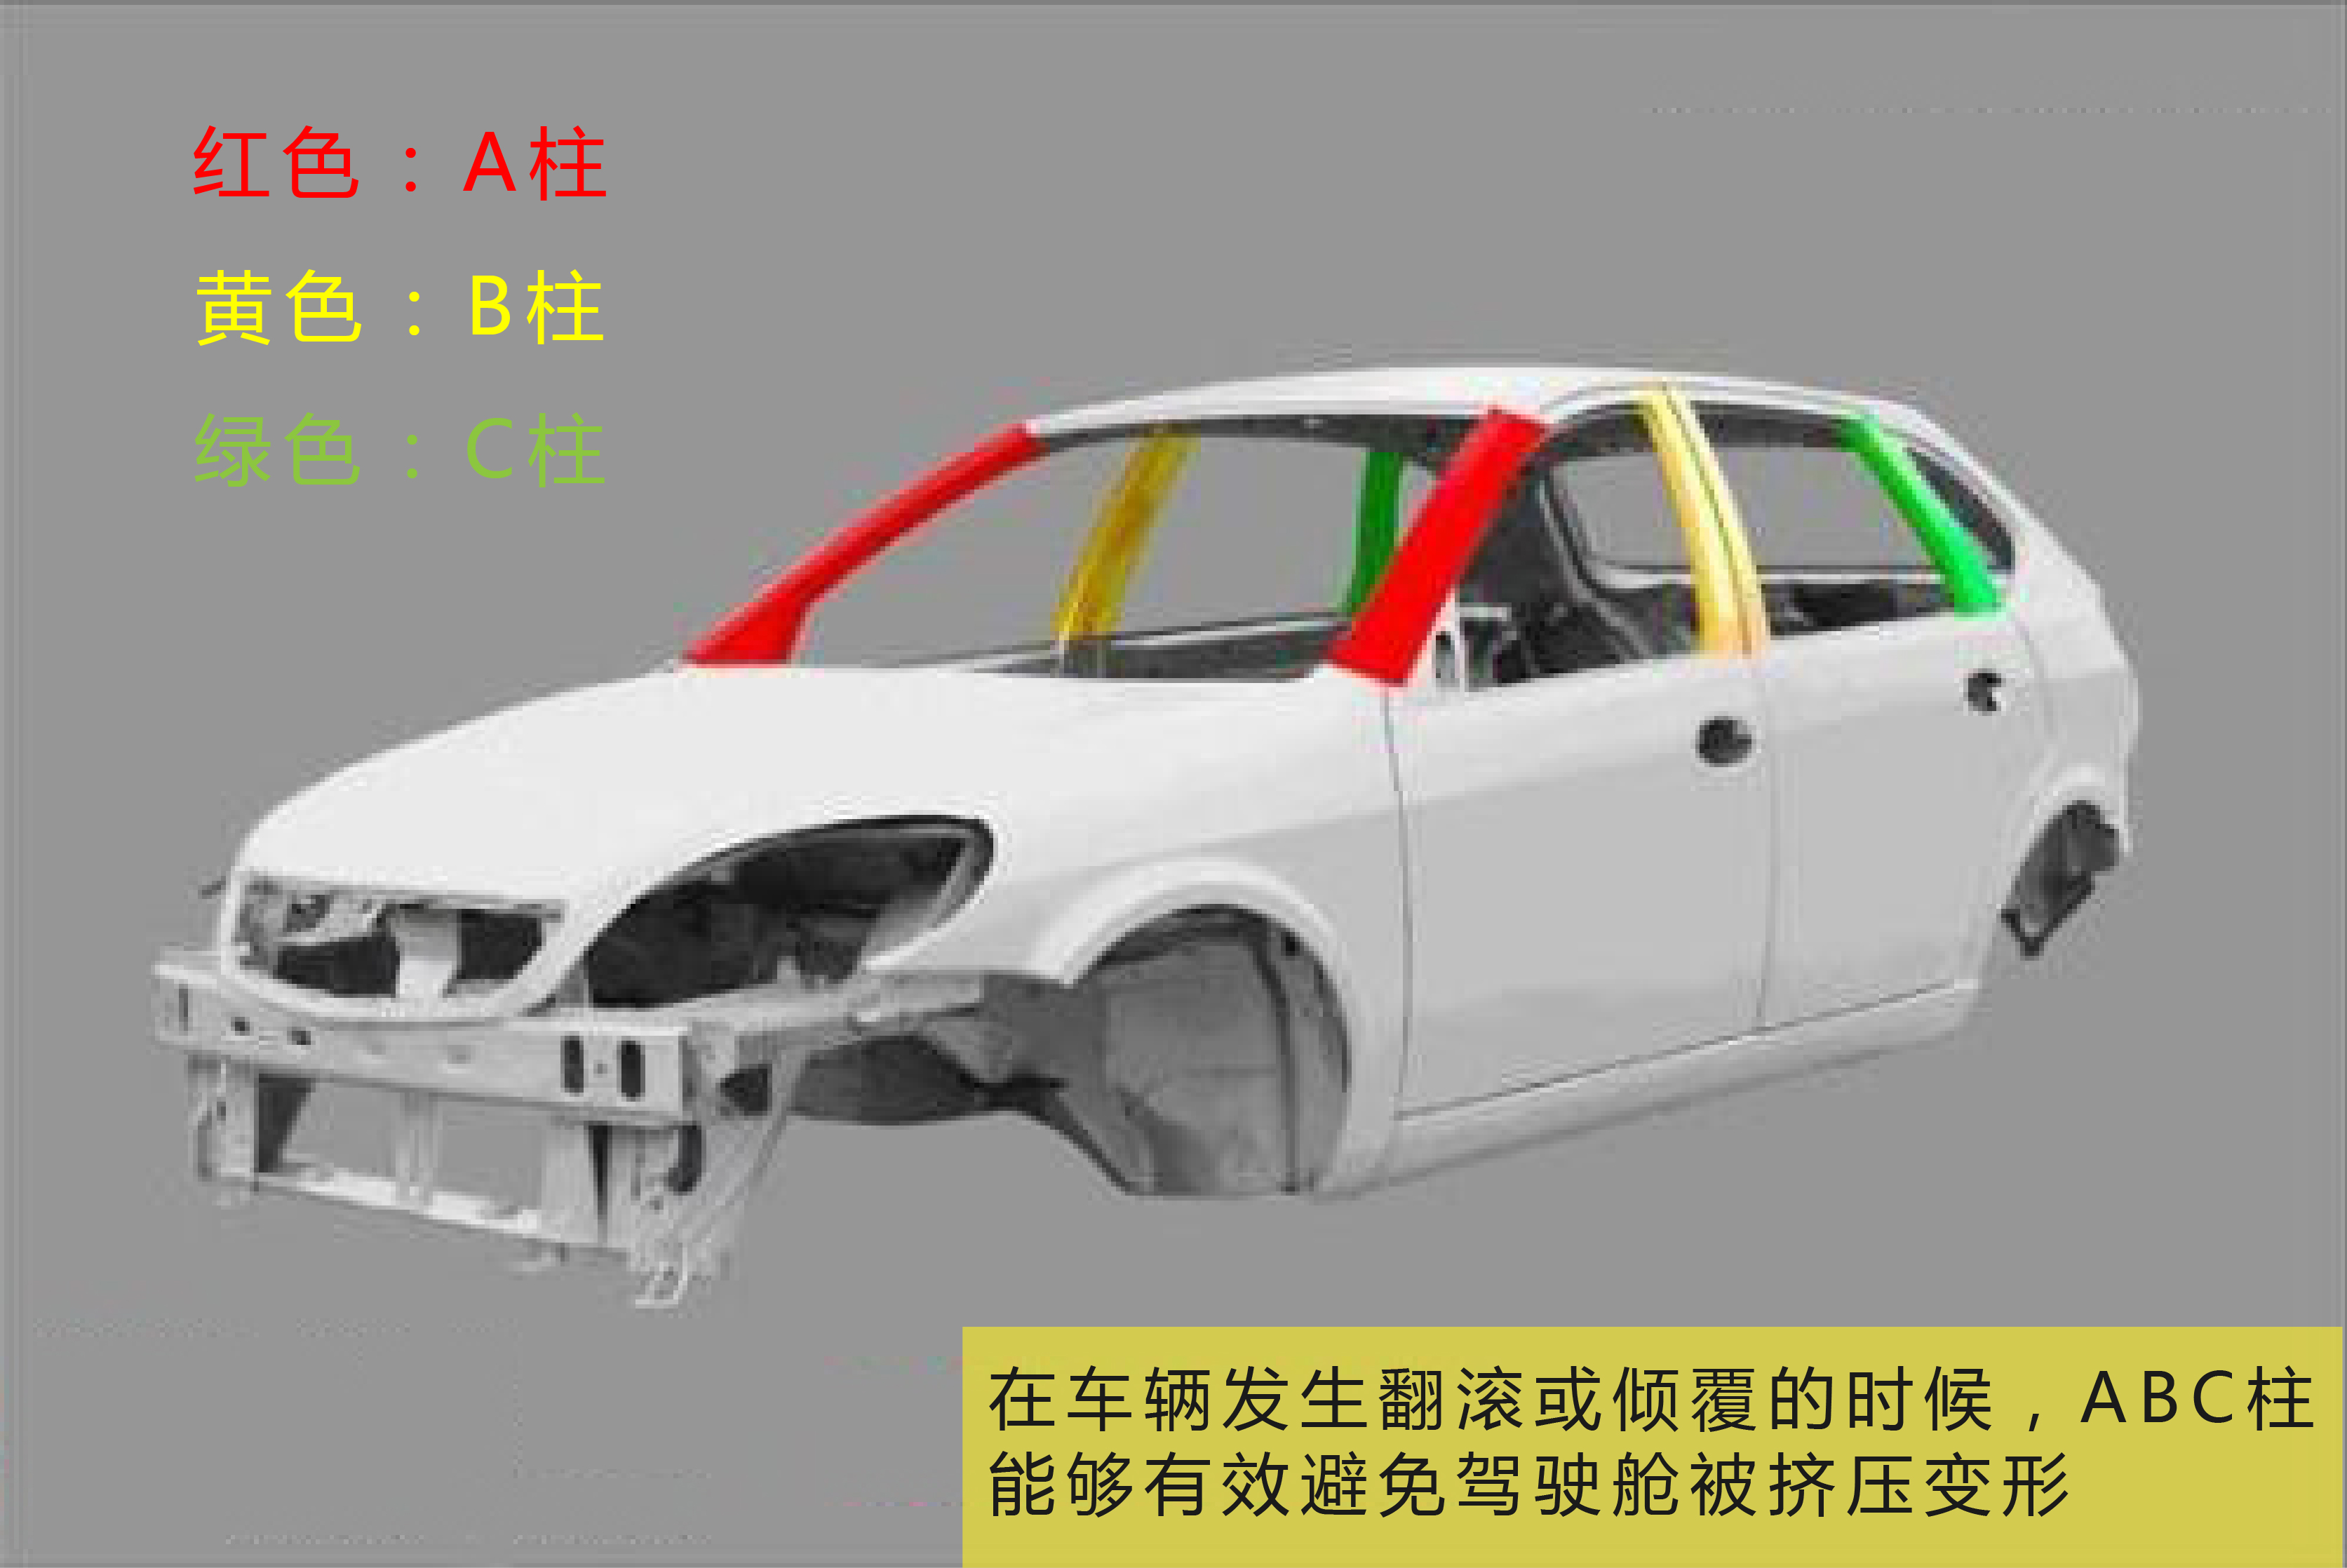 abc柱有焊接,切割,整形,变形的车辆